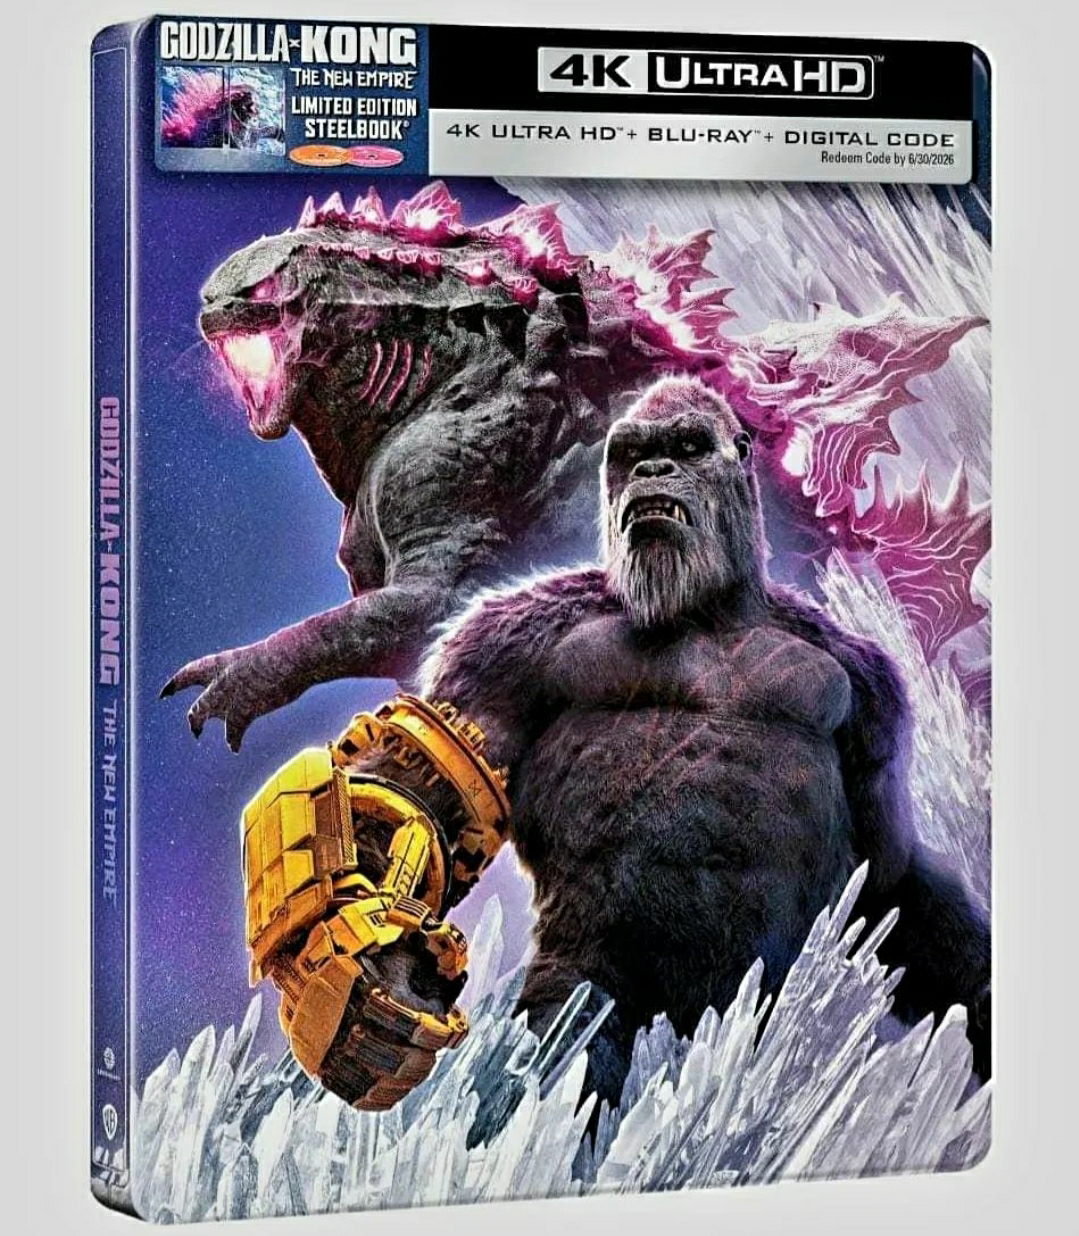 Godzilla x Kong BluRay steelbook artwork